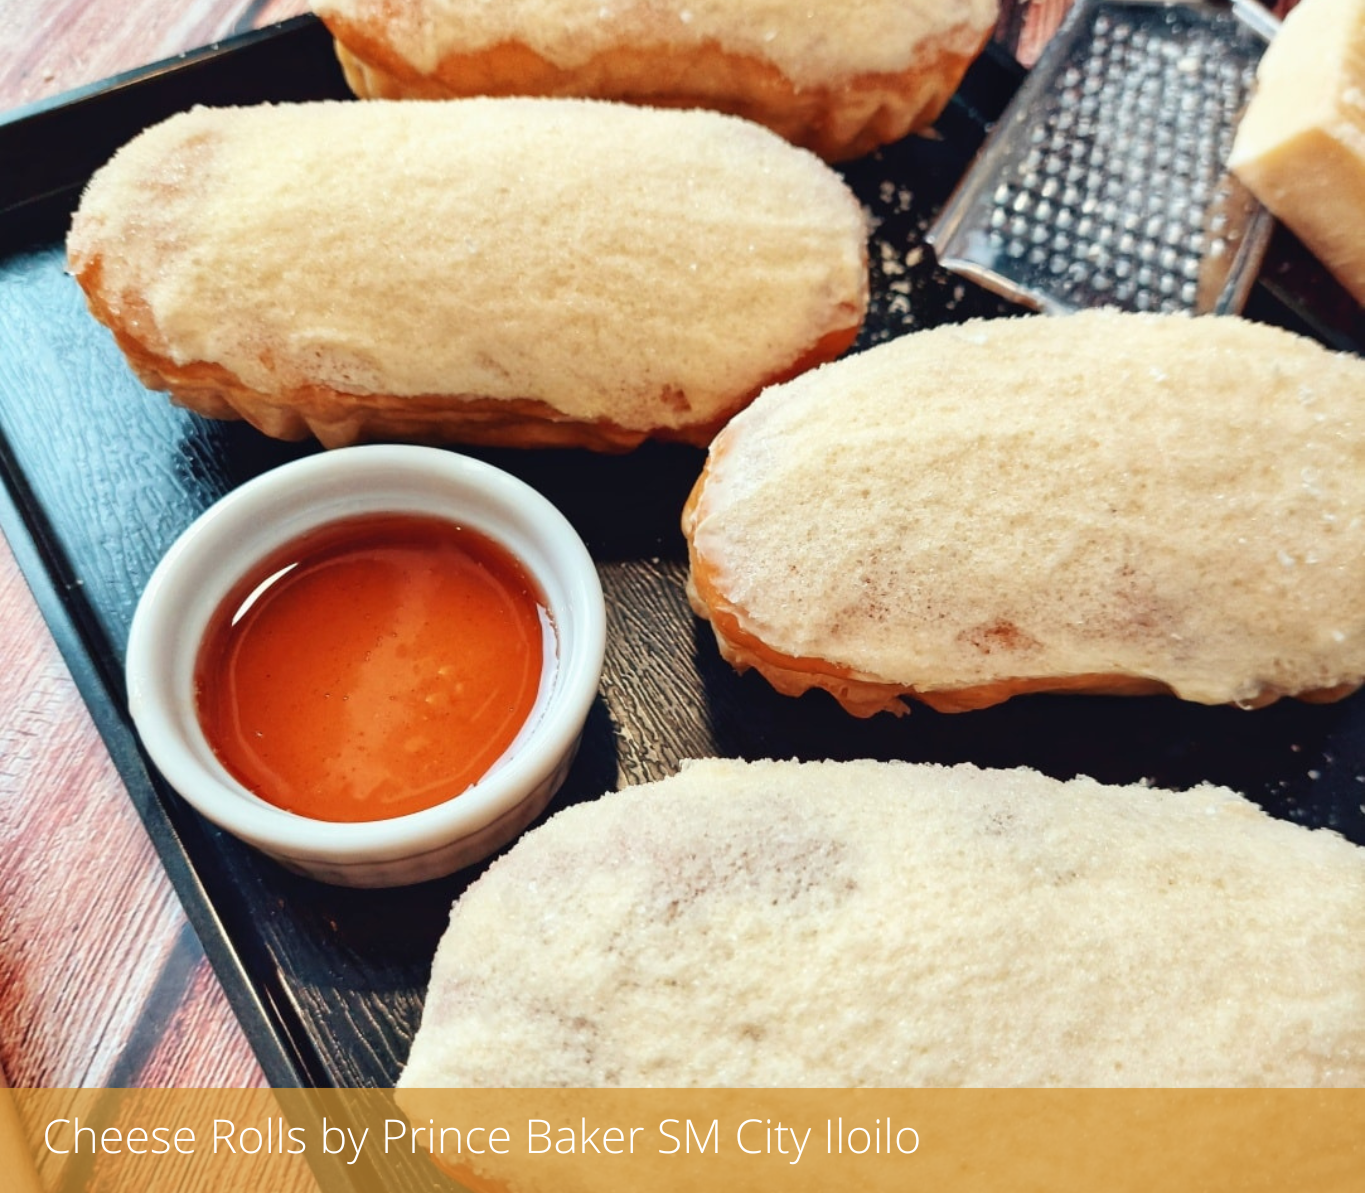 Cheese Rolls by Prince Baker SM City Iloilo via GlifestylePh